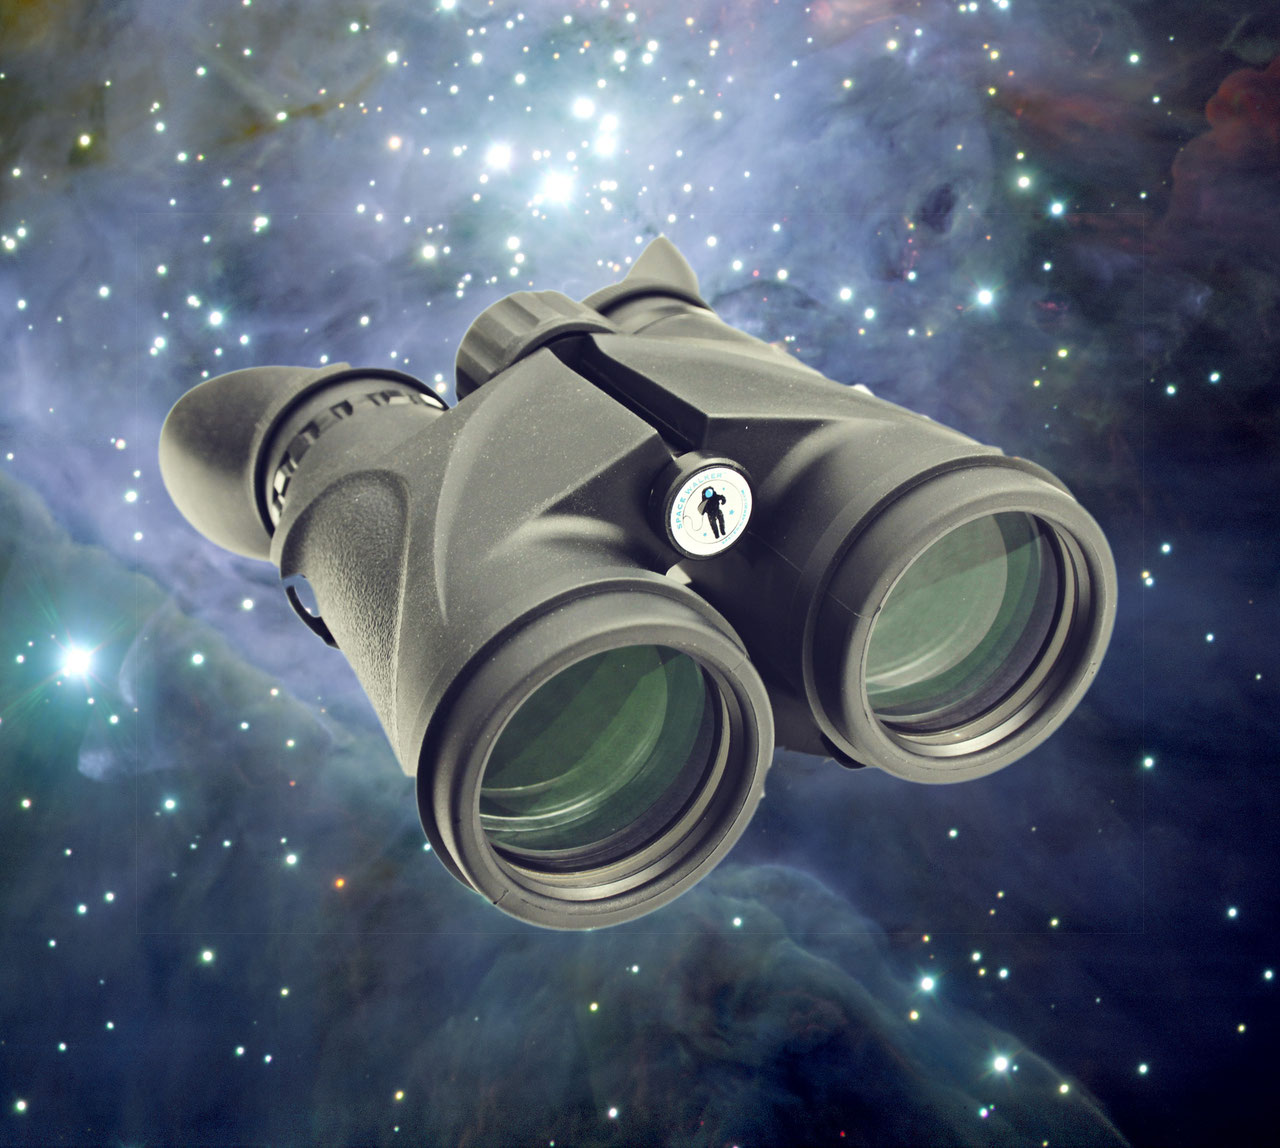 amateur astronomy binoculars for